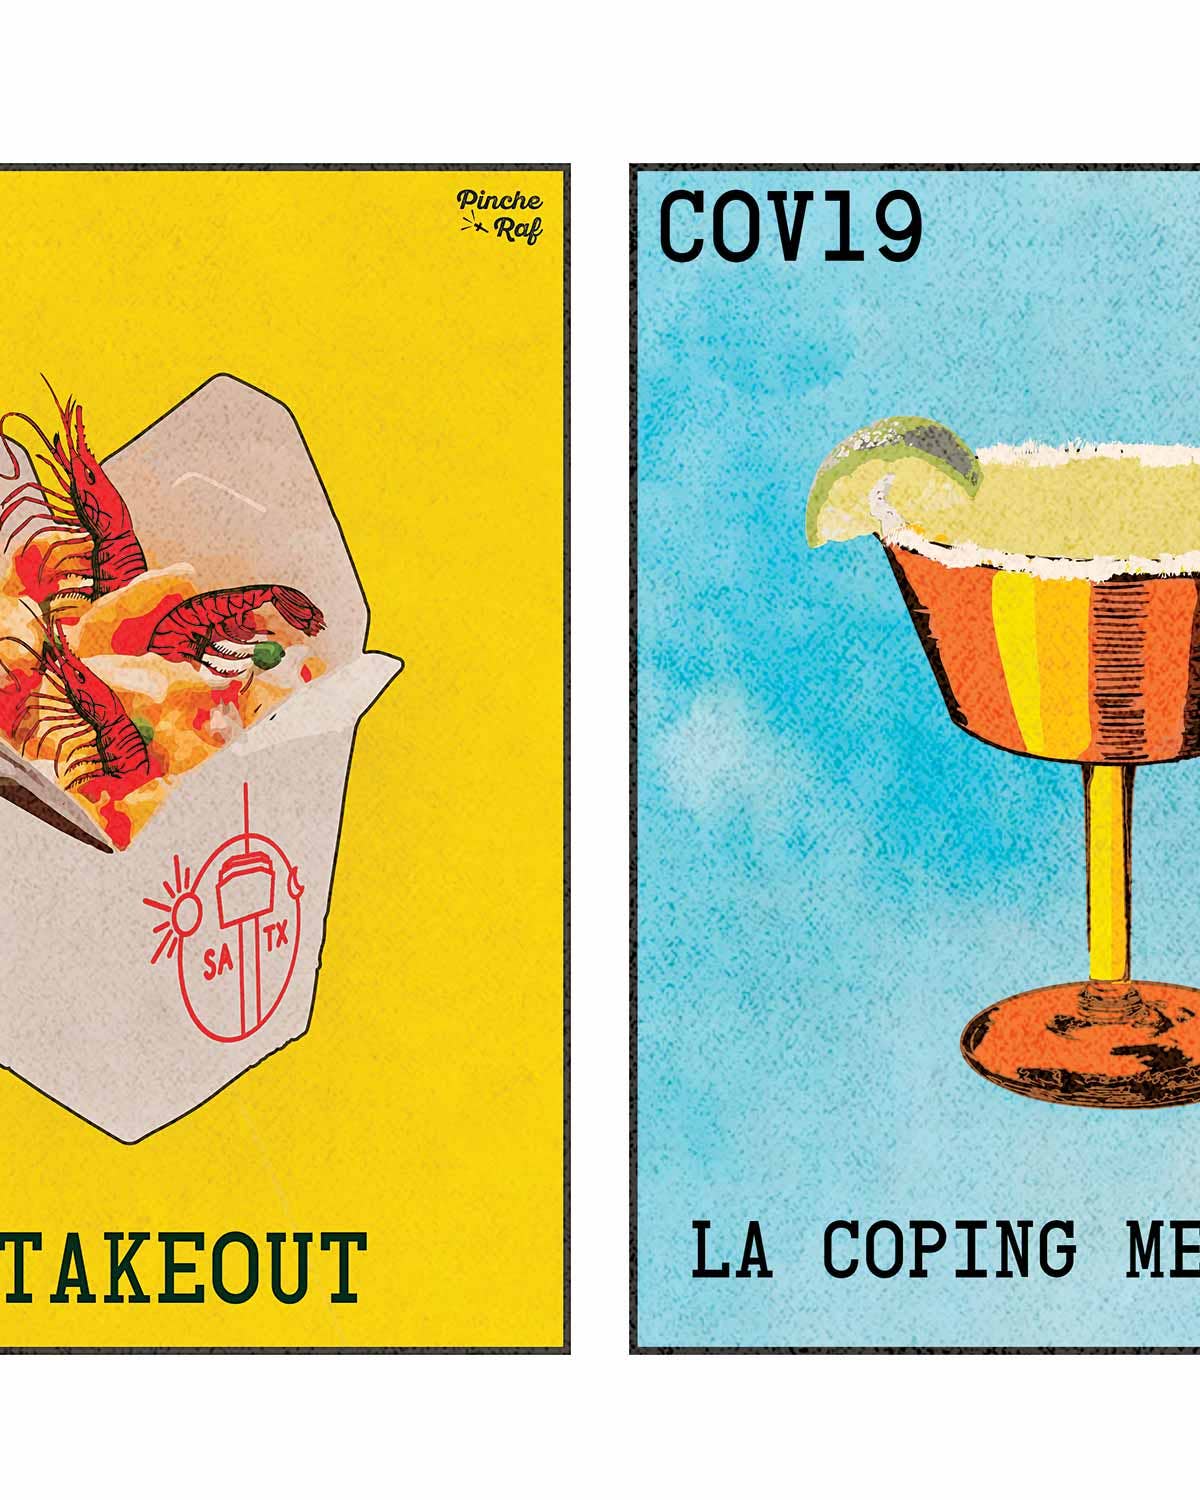 COVID-19 culinary illustrations